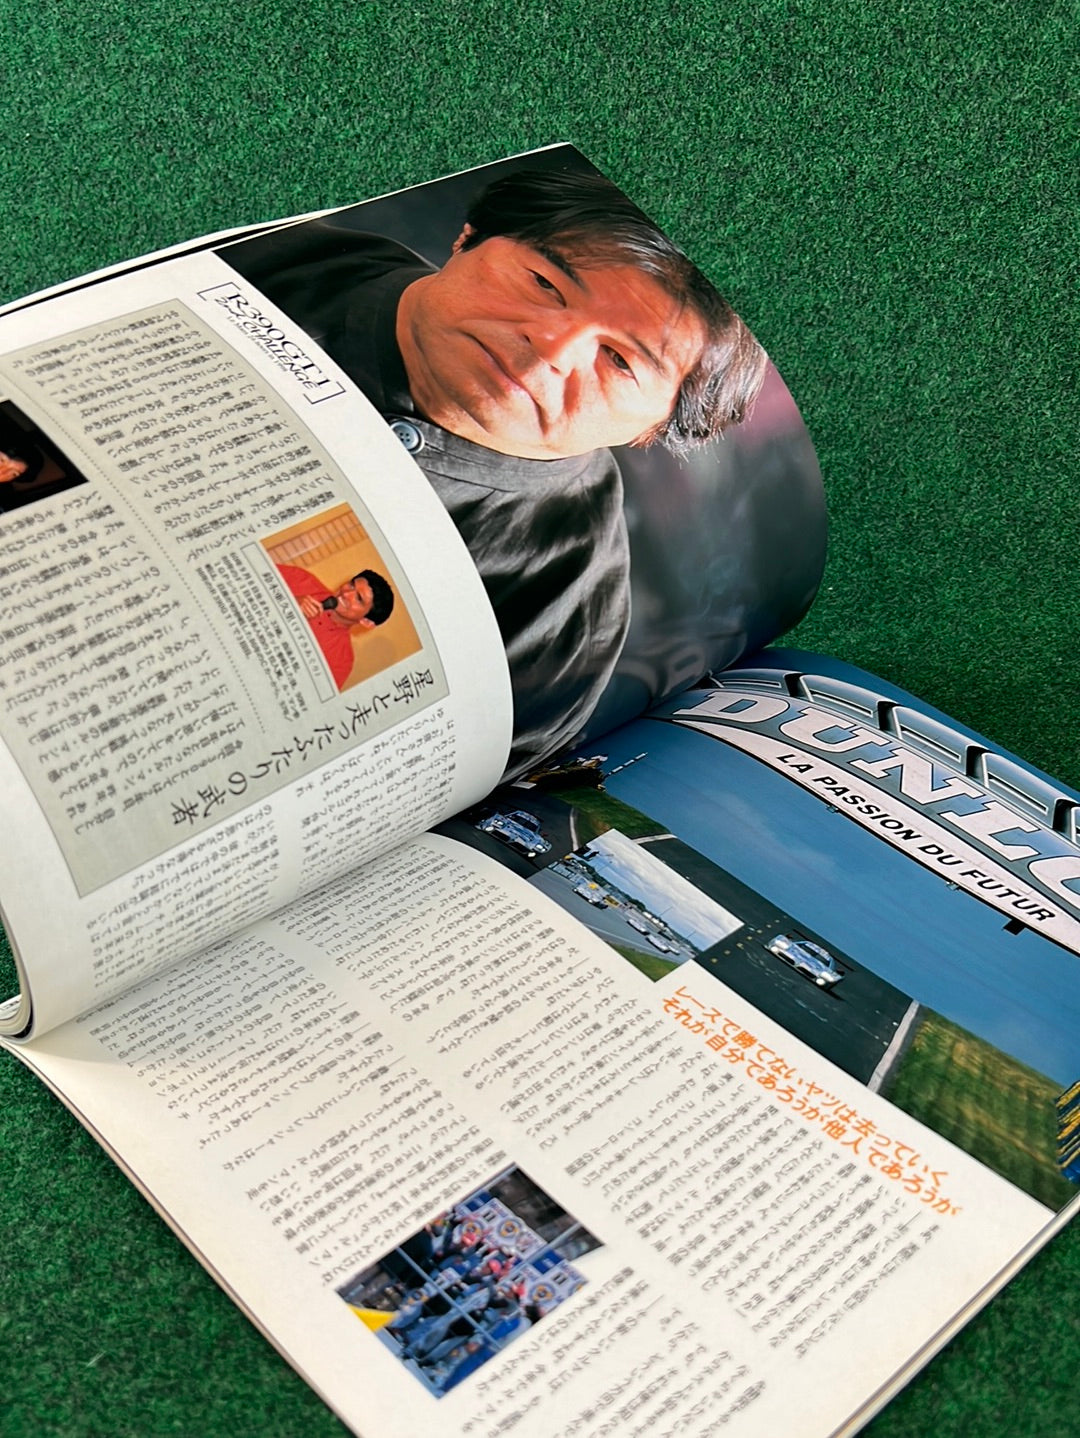 GT-R Magazine - 1998 Vol. 022